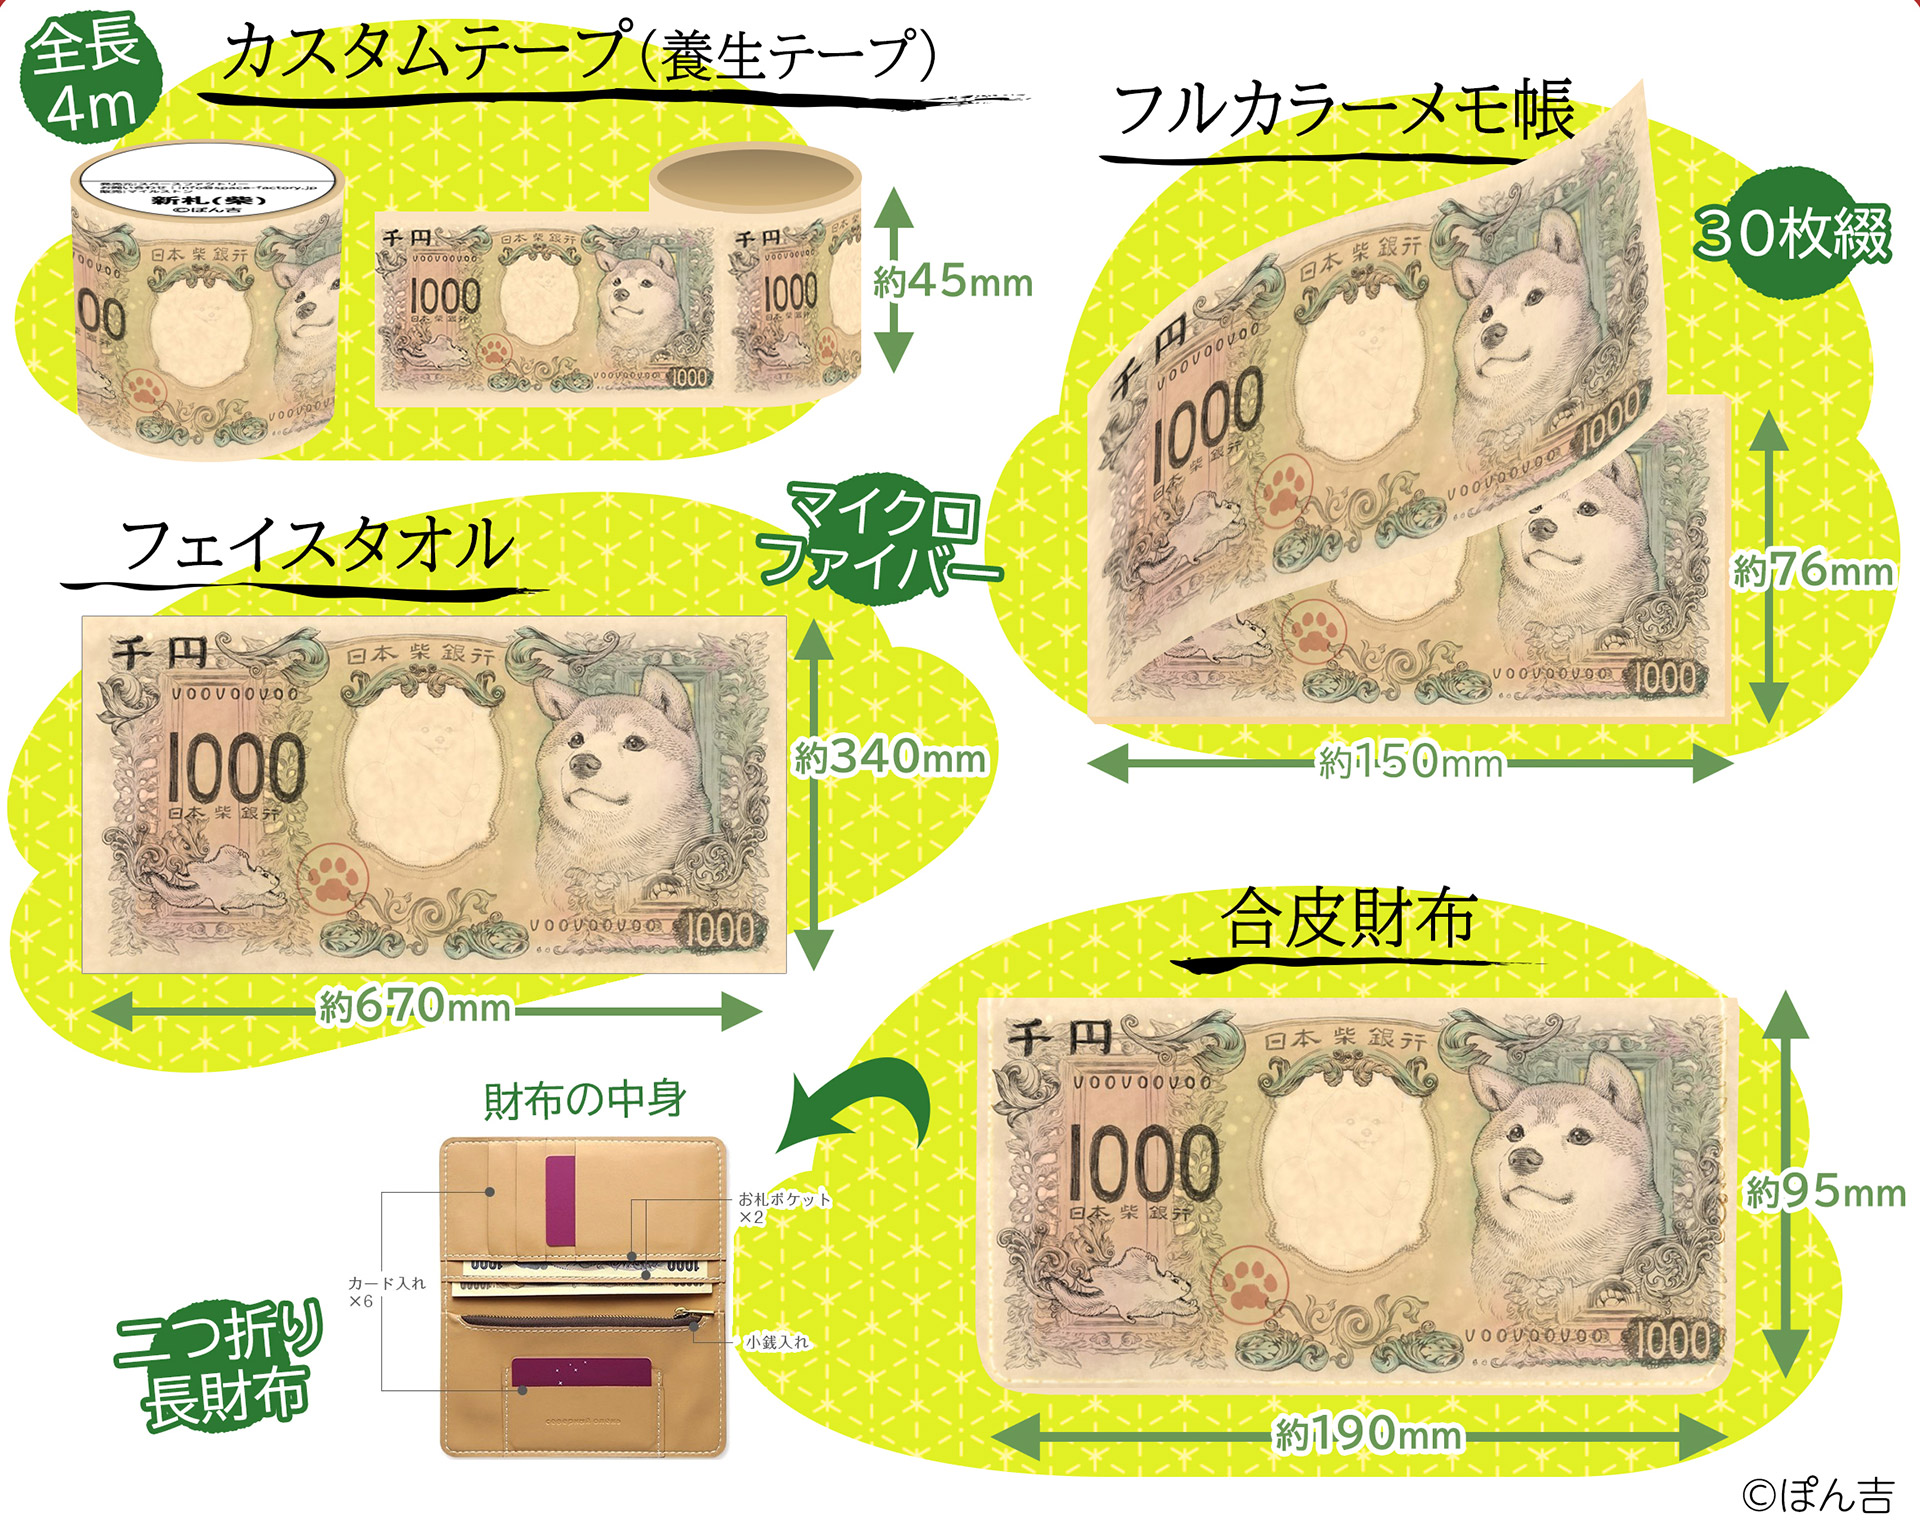 Shiba Dog 1,000 Yen Products